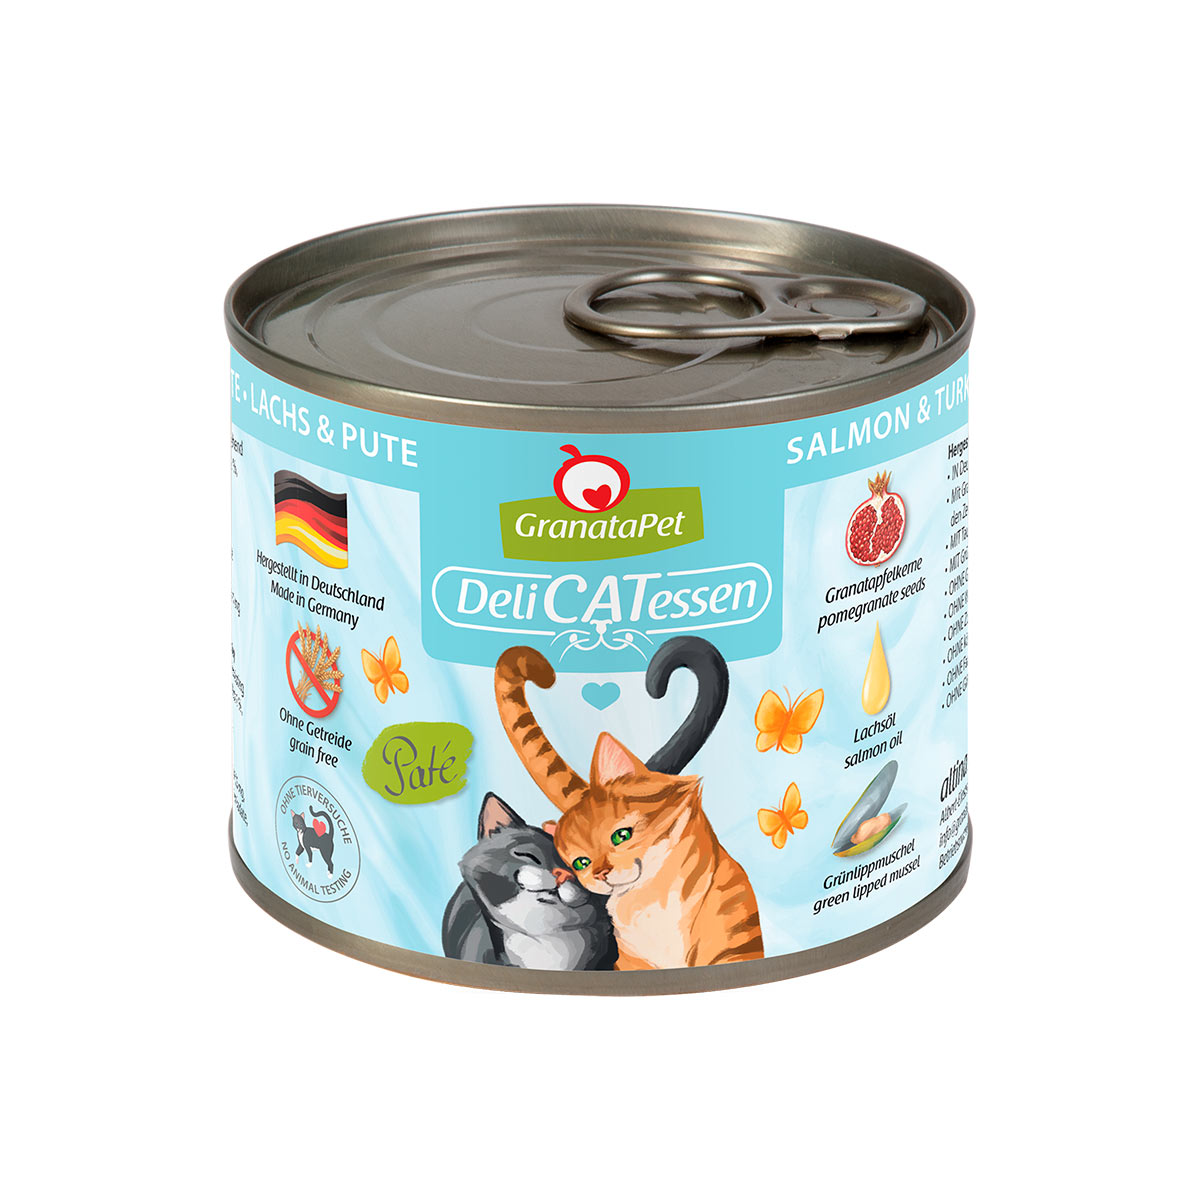 GranataPet Katze – Delicatessen Dose Lachs & Pute 6x200g